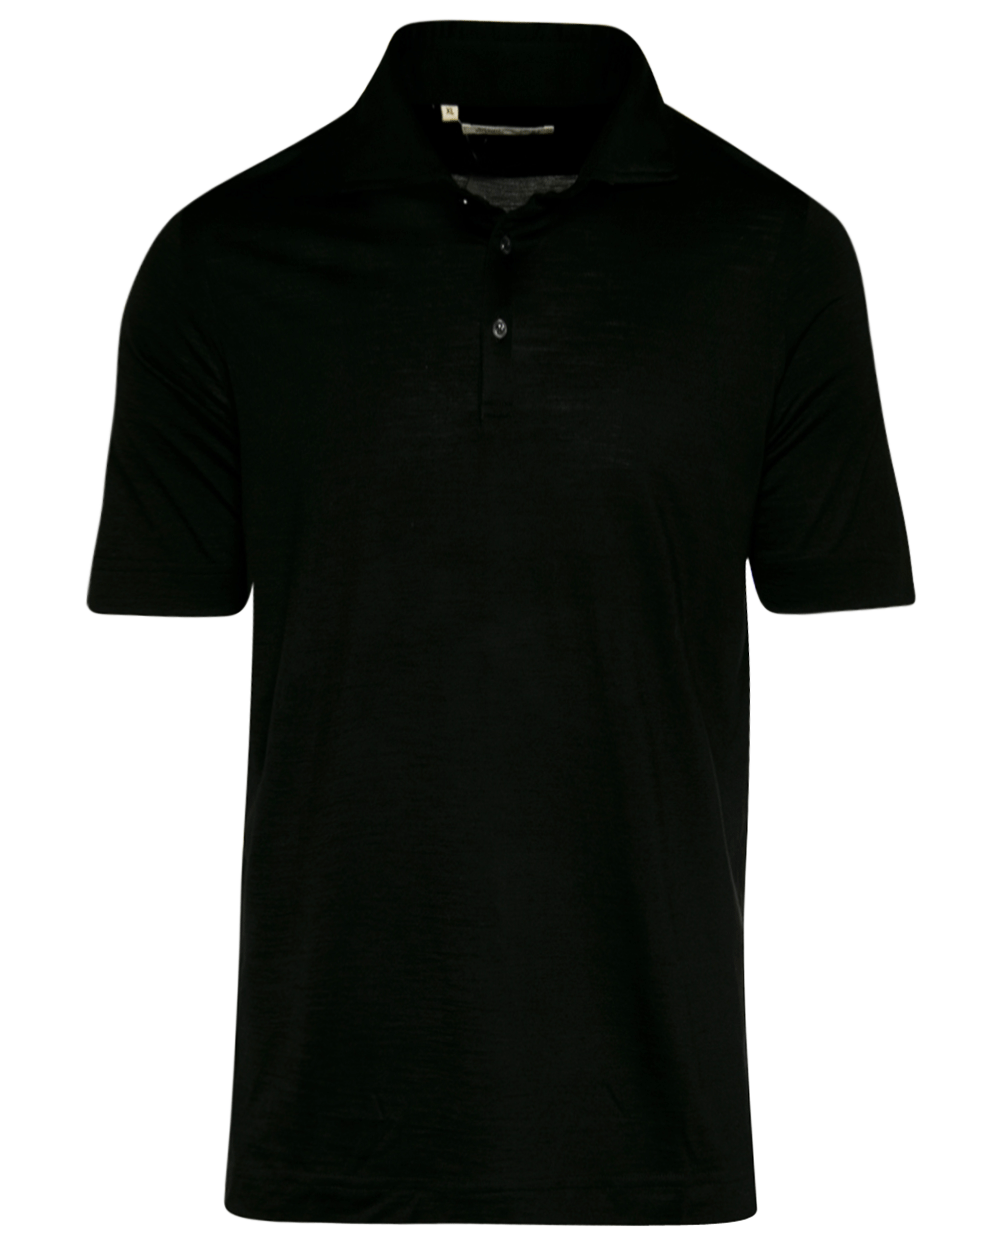 Black Wool Short Sleeve Polo